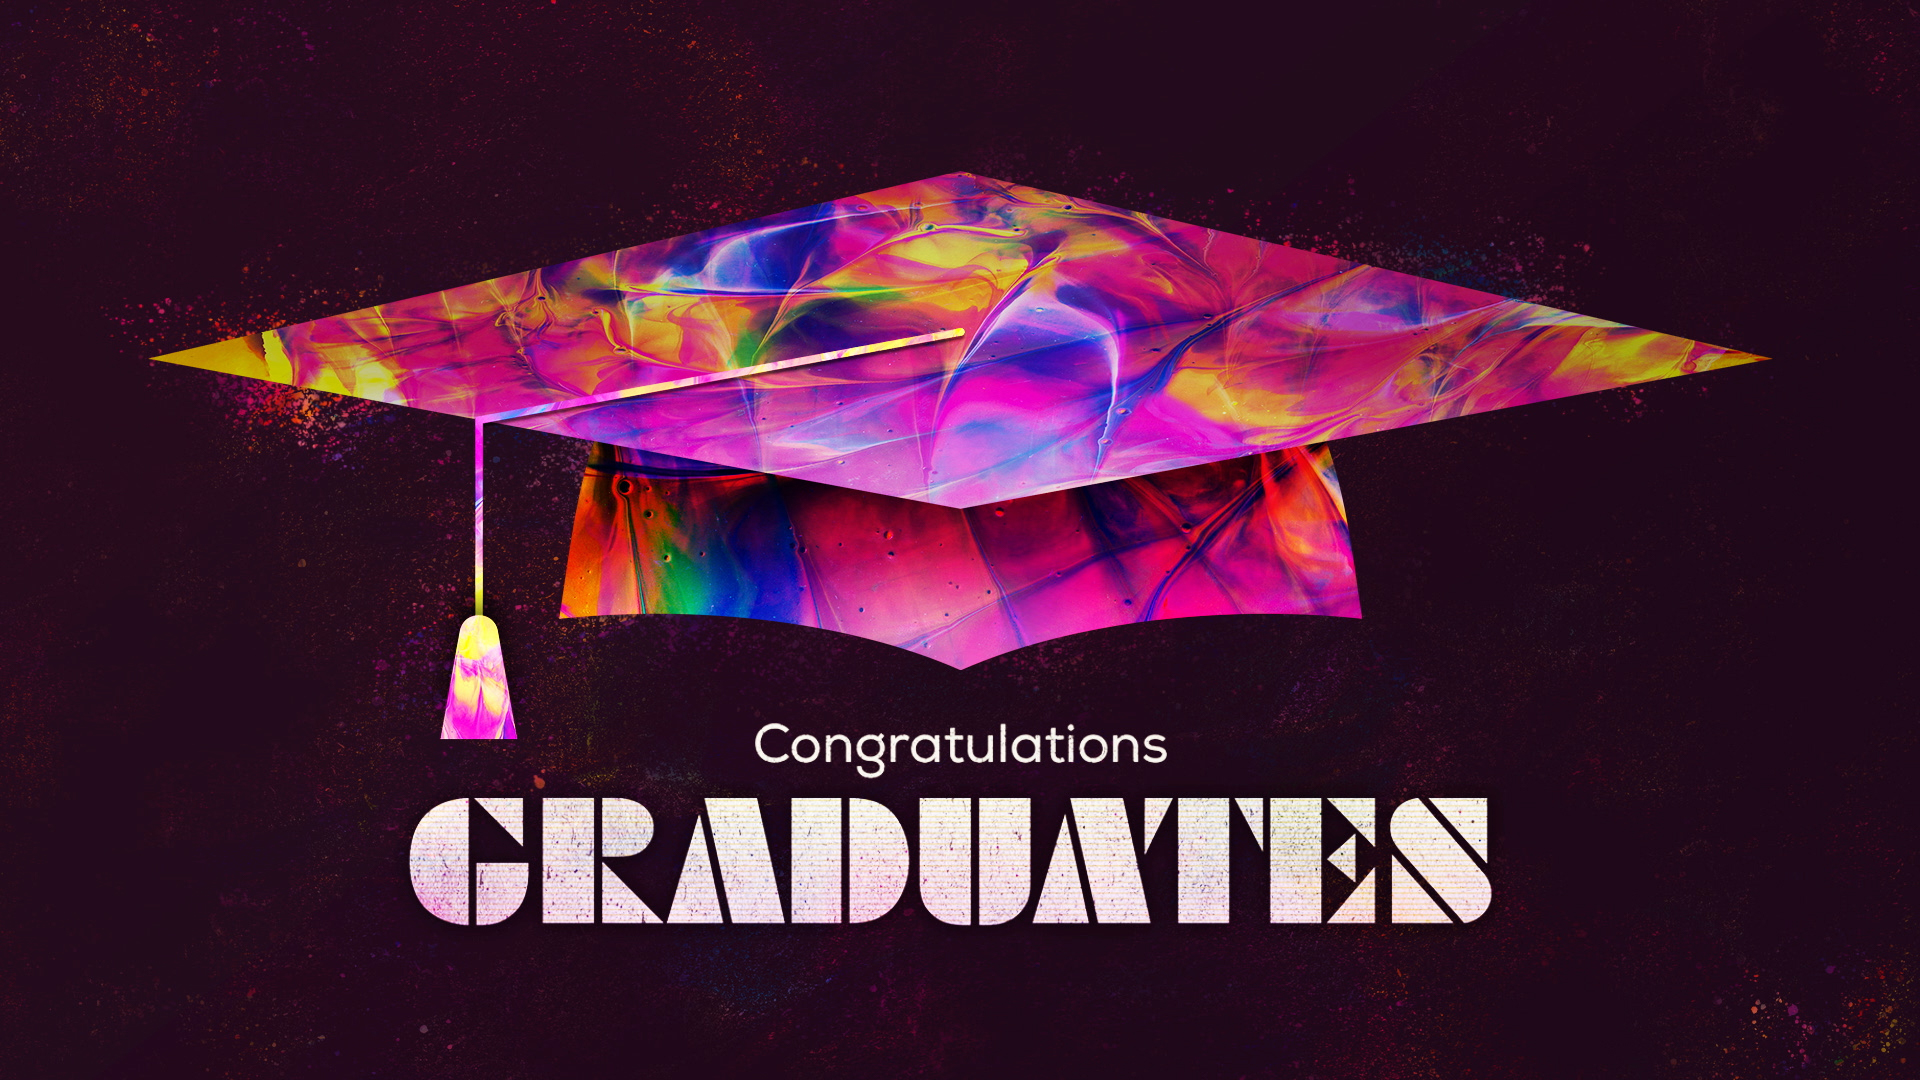 painted_graduation_congratulations_graduates-Wide 16x9 image